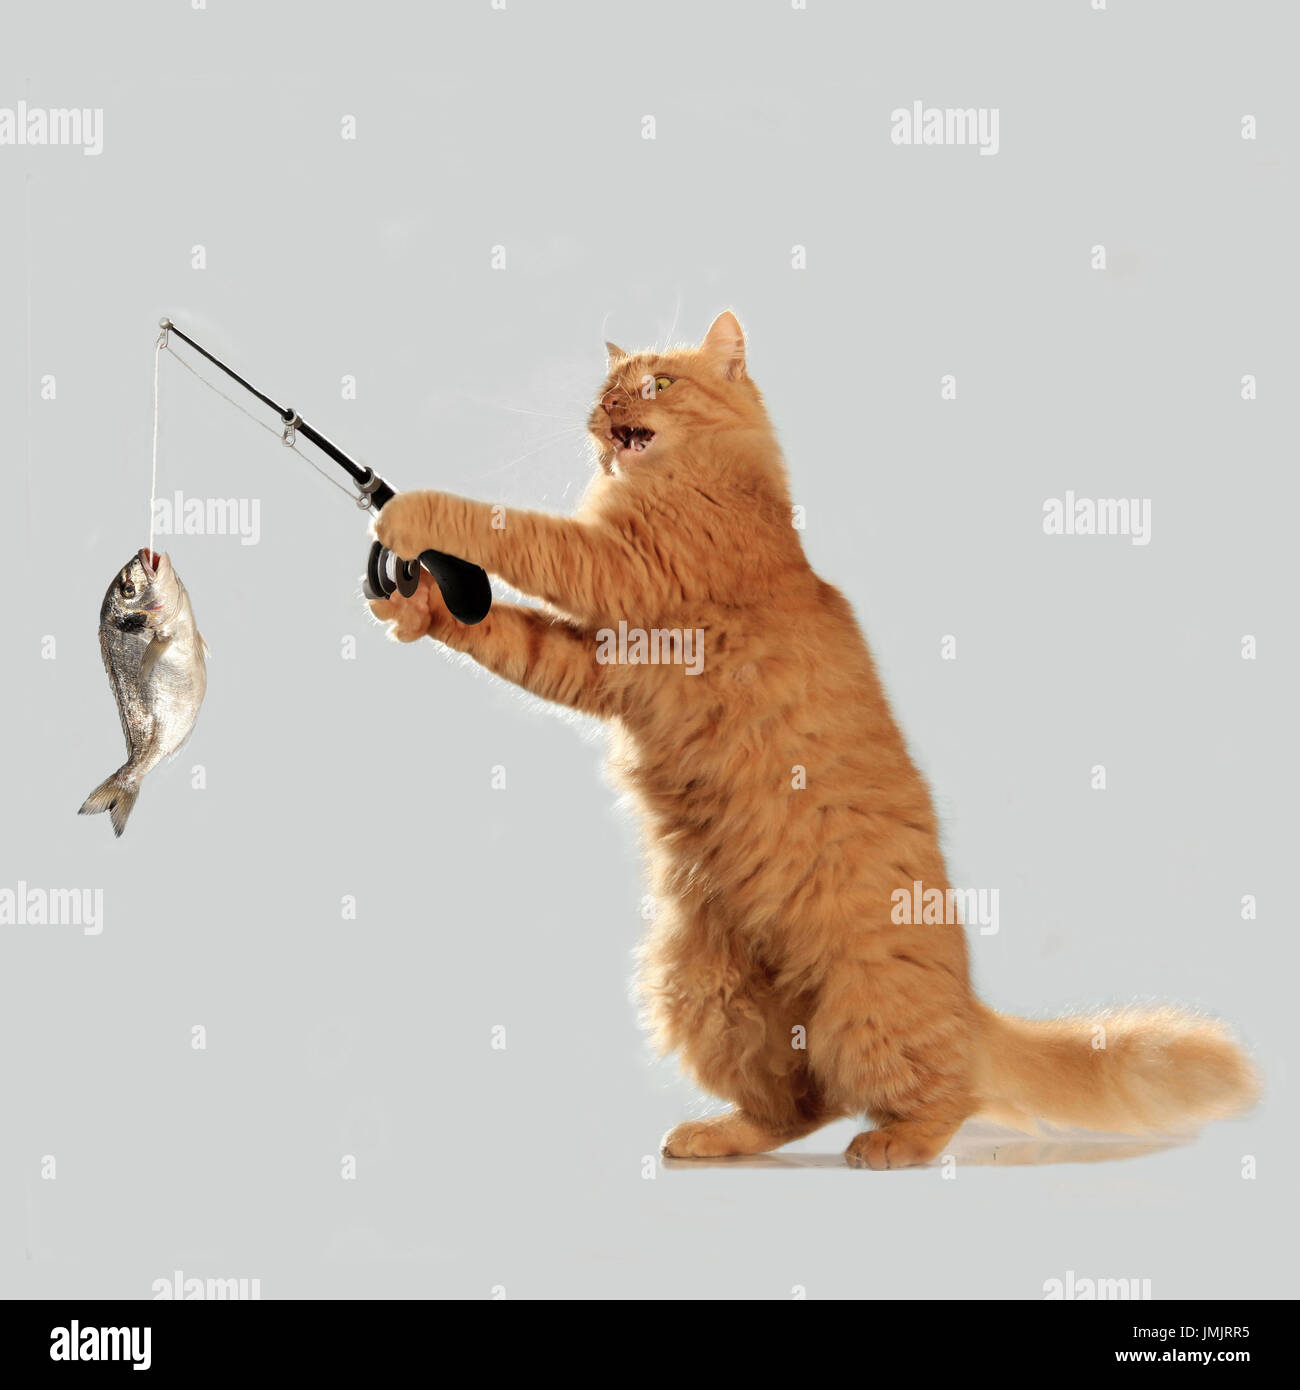 https://c8.alamy.com/comp/JMJRR5/domestic-cat-ginger-fishing-a-fish-with-a-fishingrod-JMJRR5.jpg